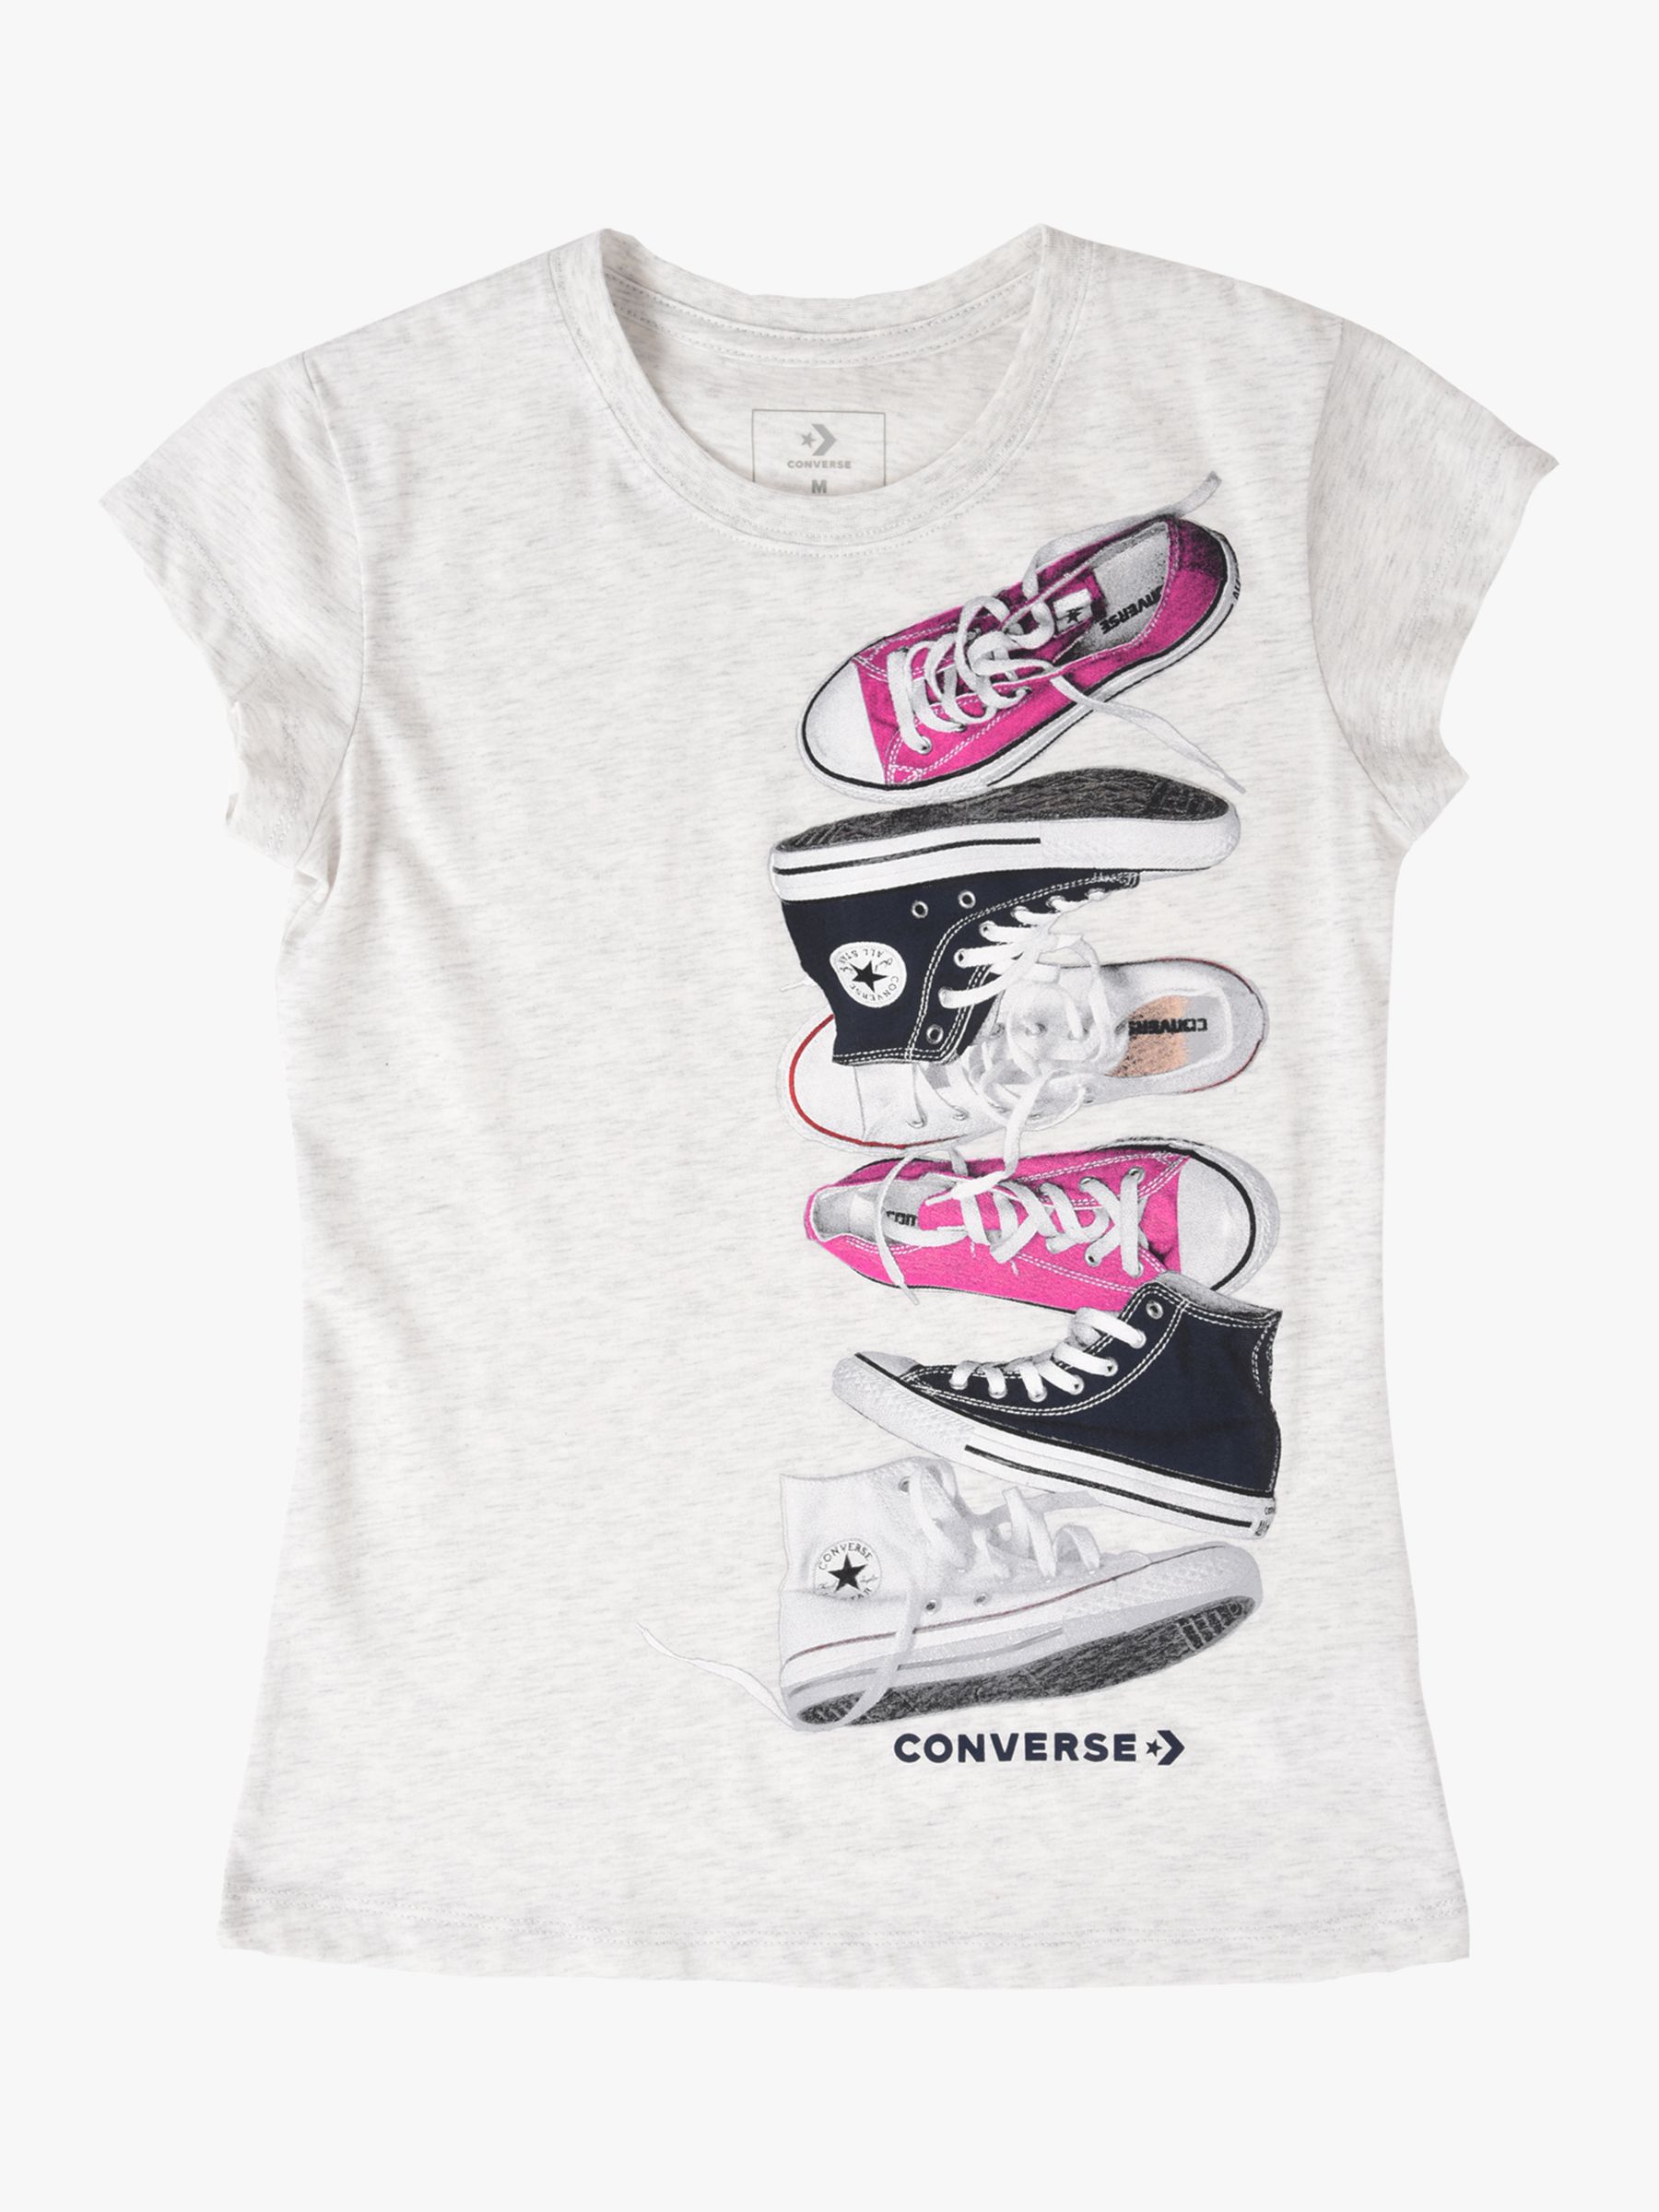 Converse Girl`s Top T-Shirt Grey Size 5 